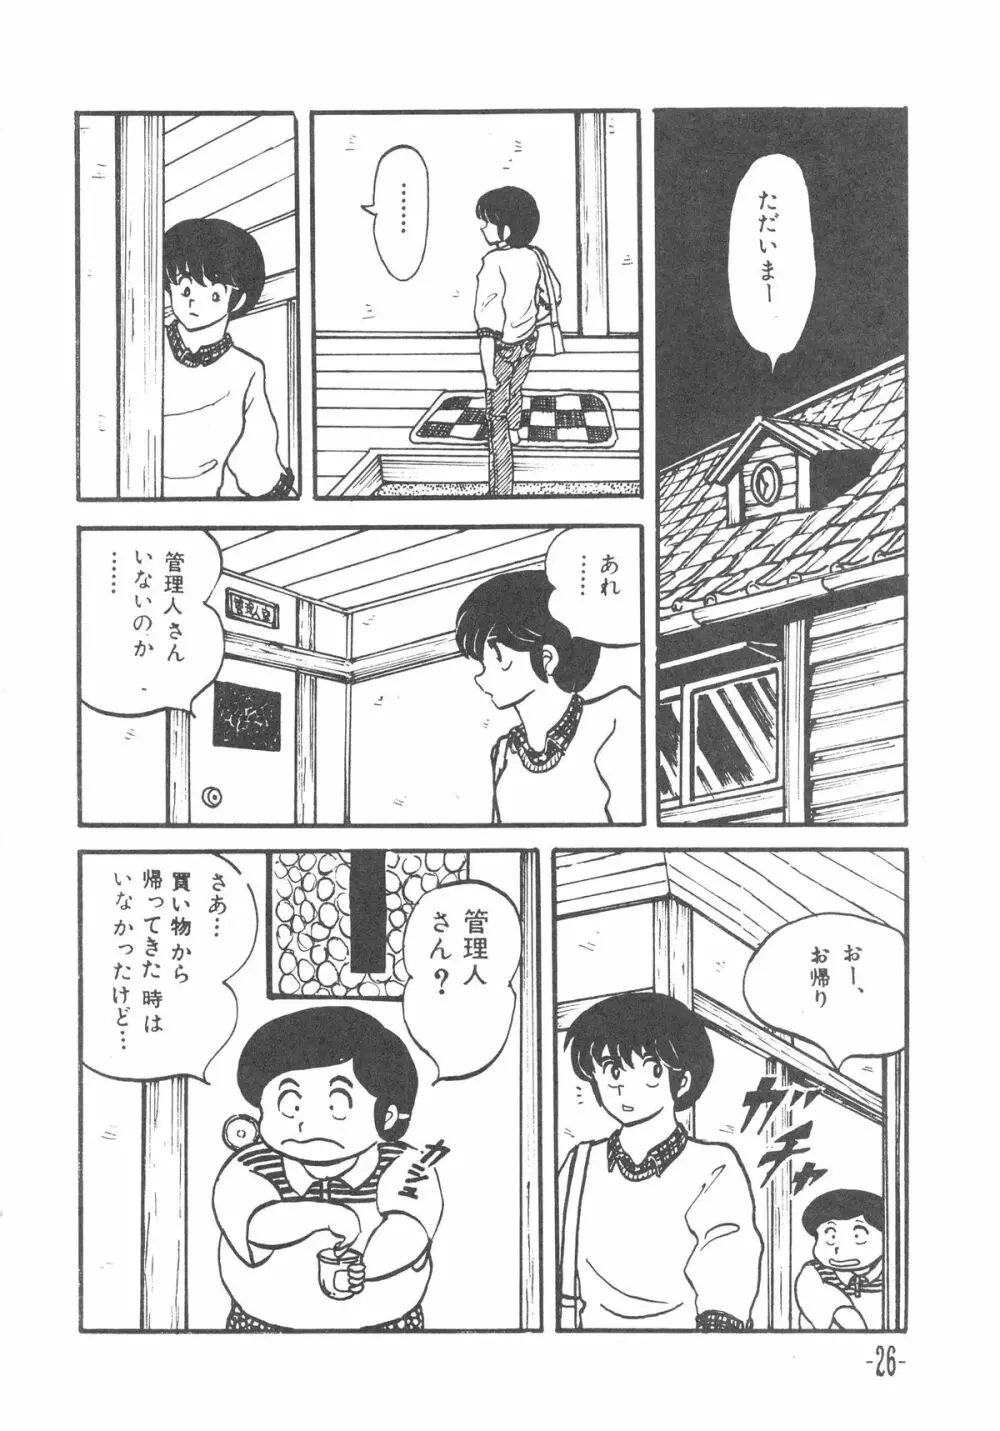 MIBOJIN GESHUKU 1 & 2 26ページ